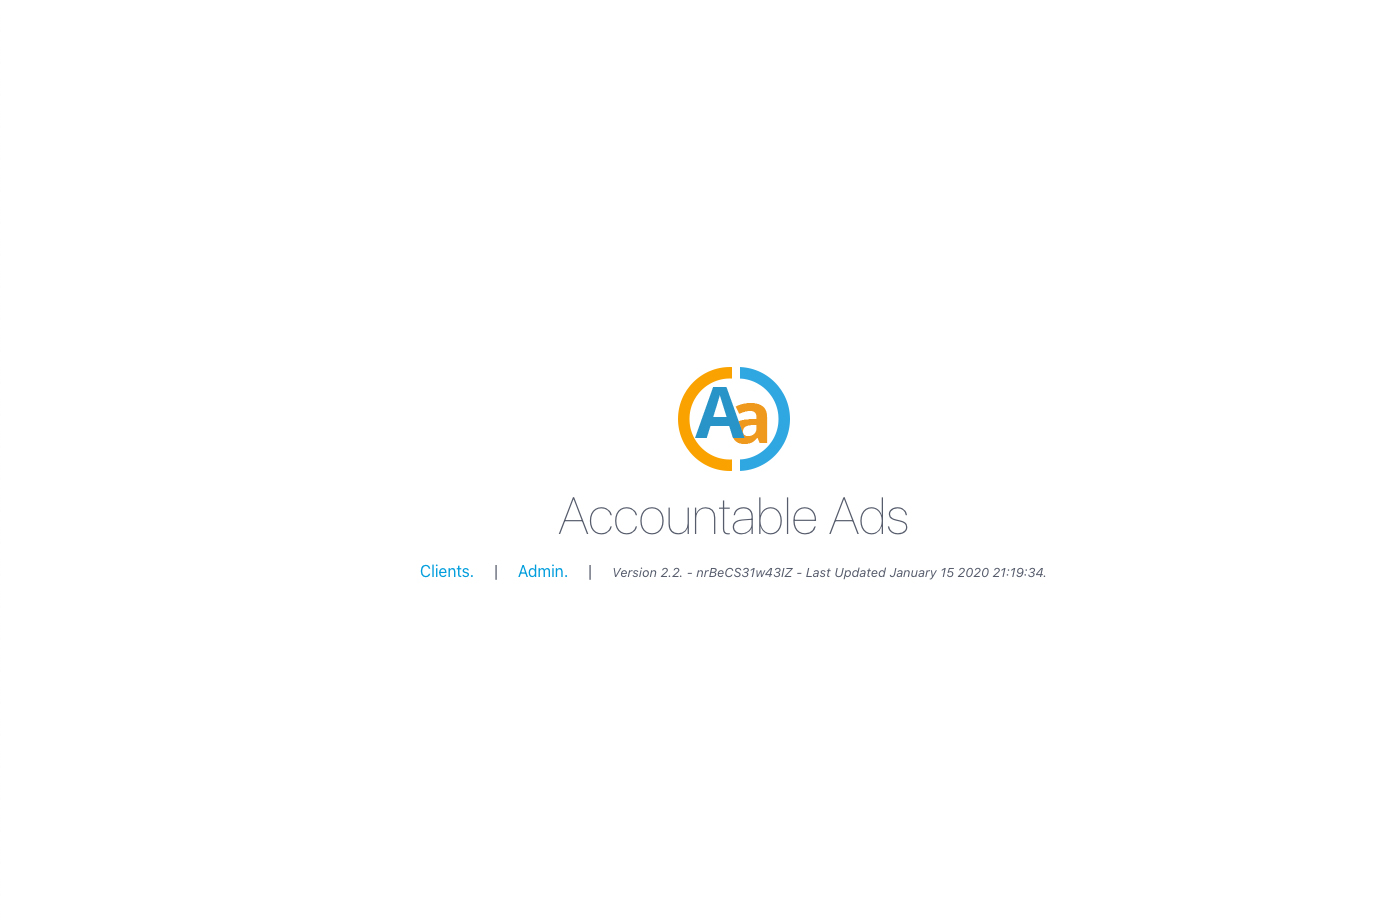 Accountable Ads Portal